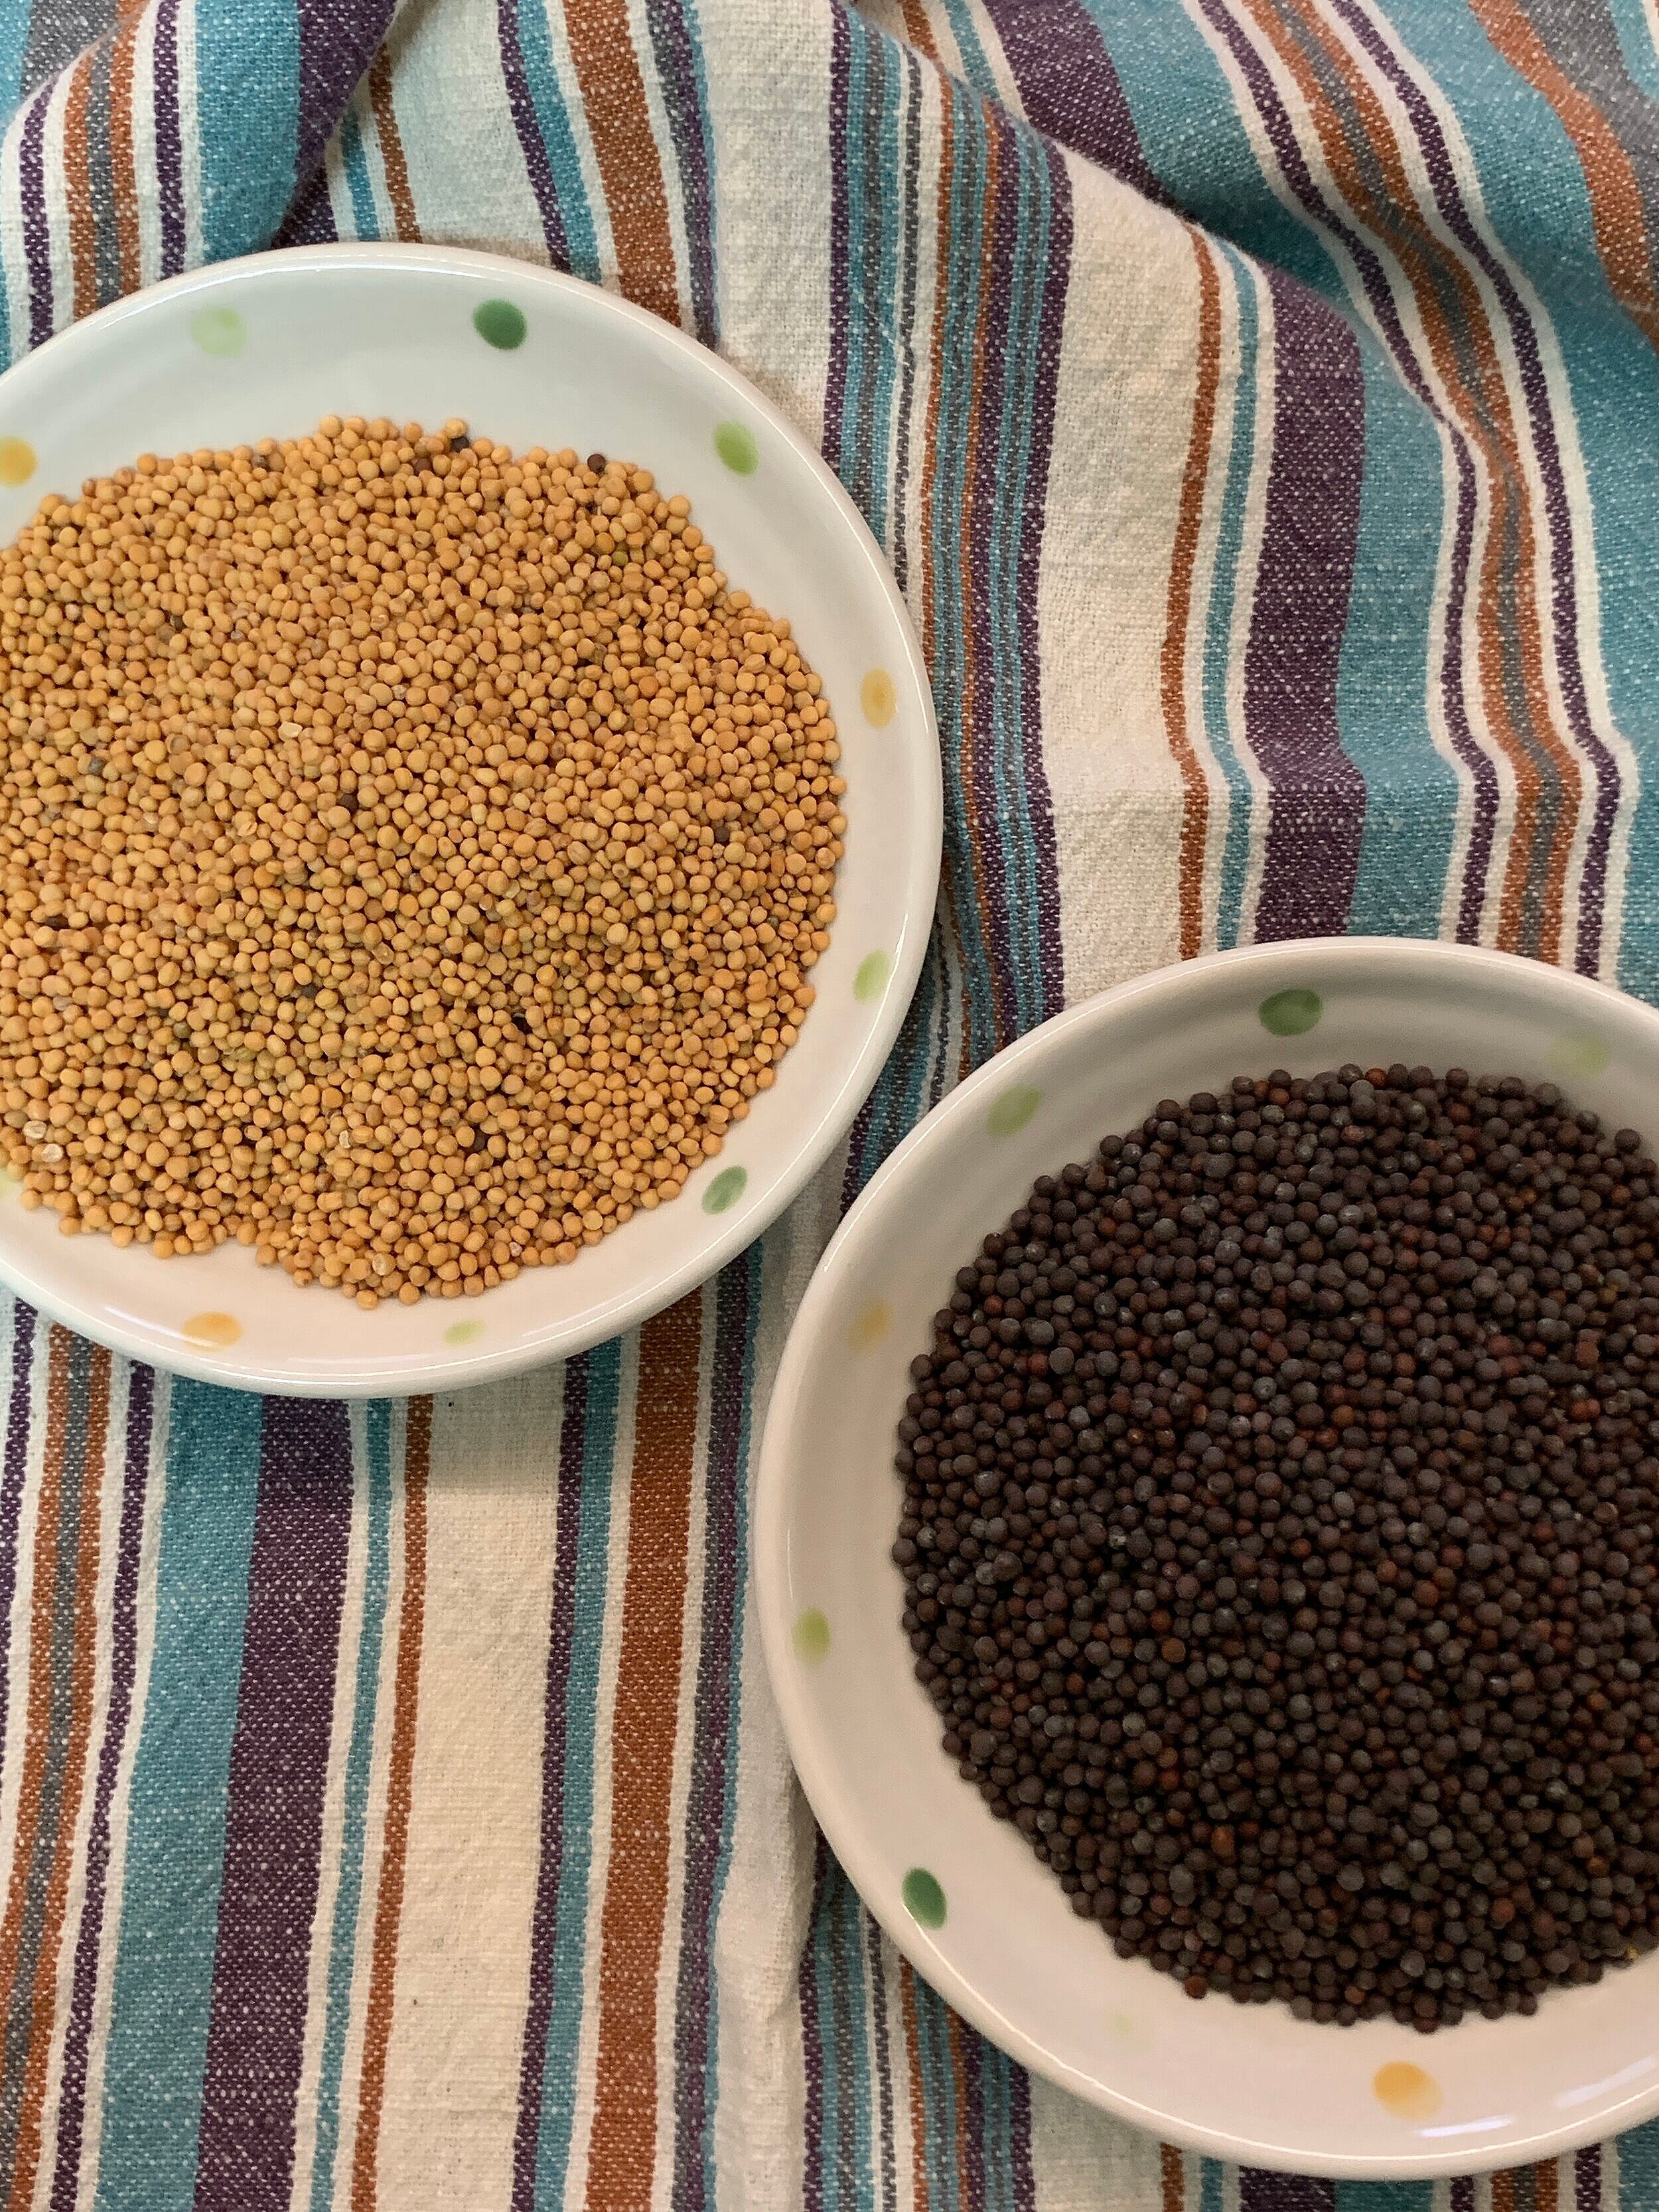 Mustard seeds,  s. alba and  b.juncea